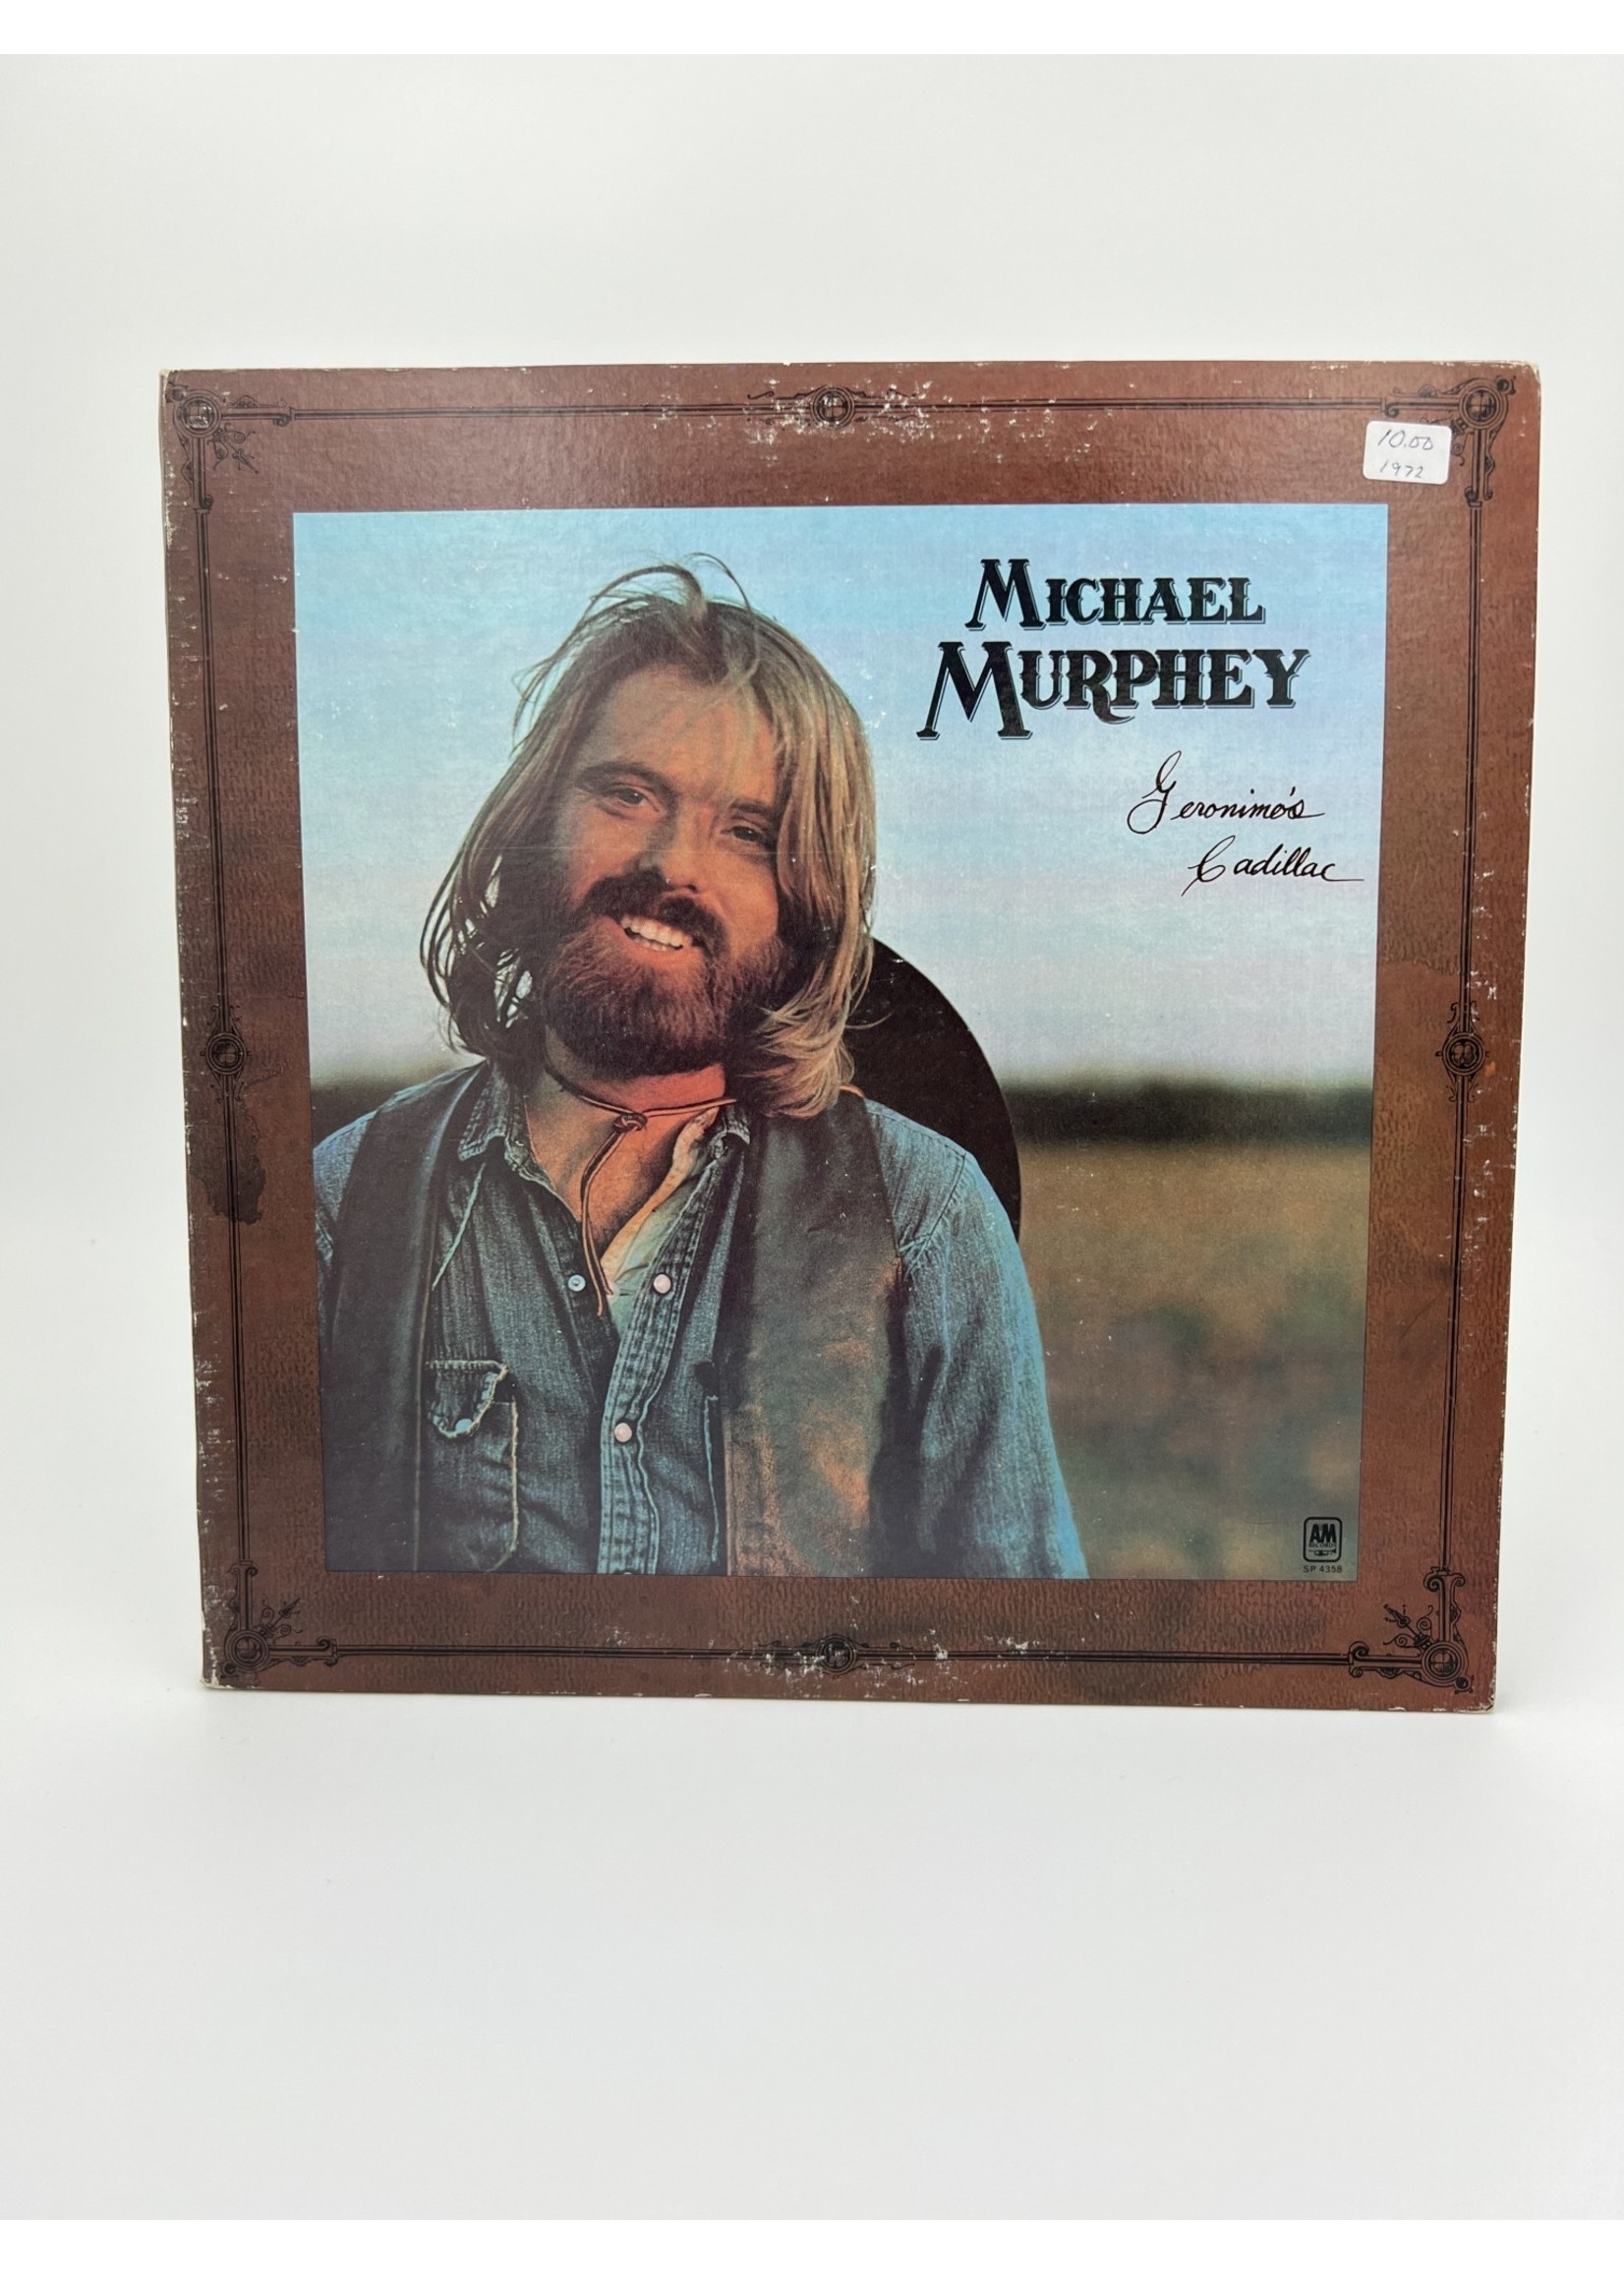 LP Michael Murphey Geronimos Cadillac LP RECORD